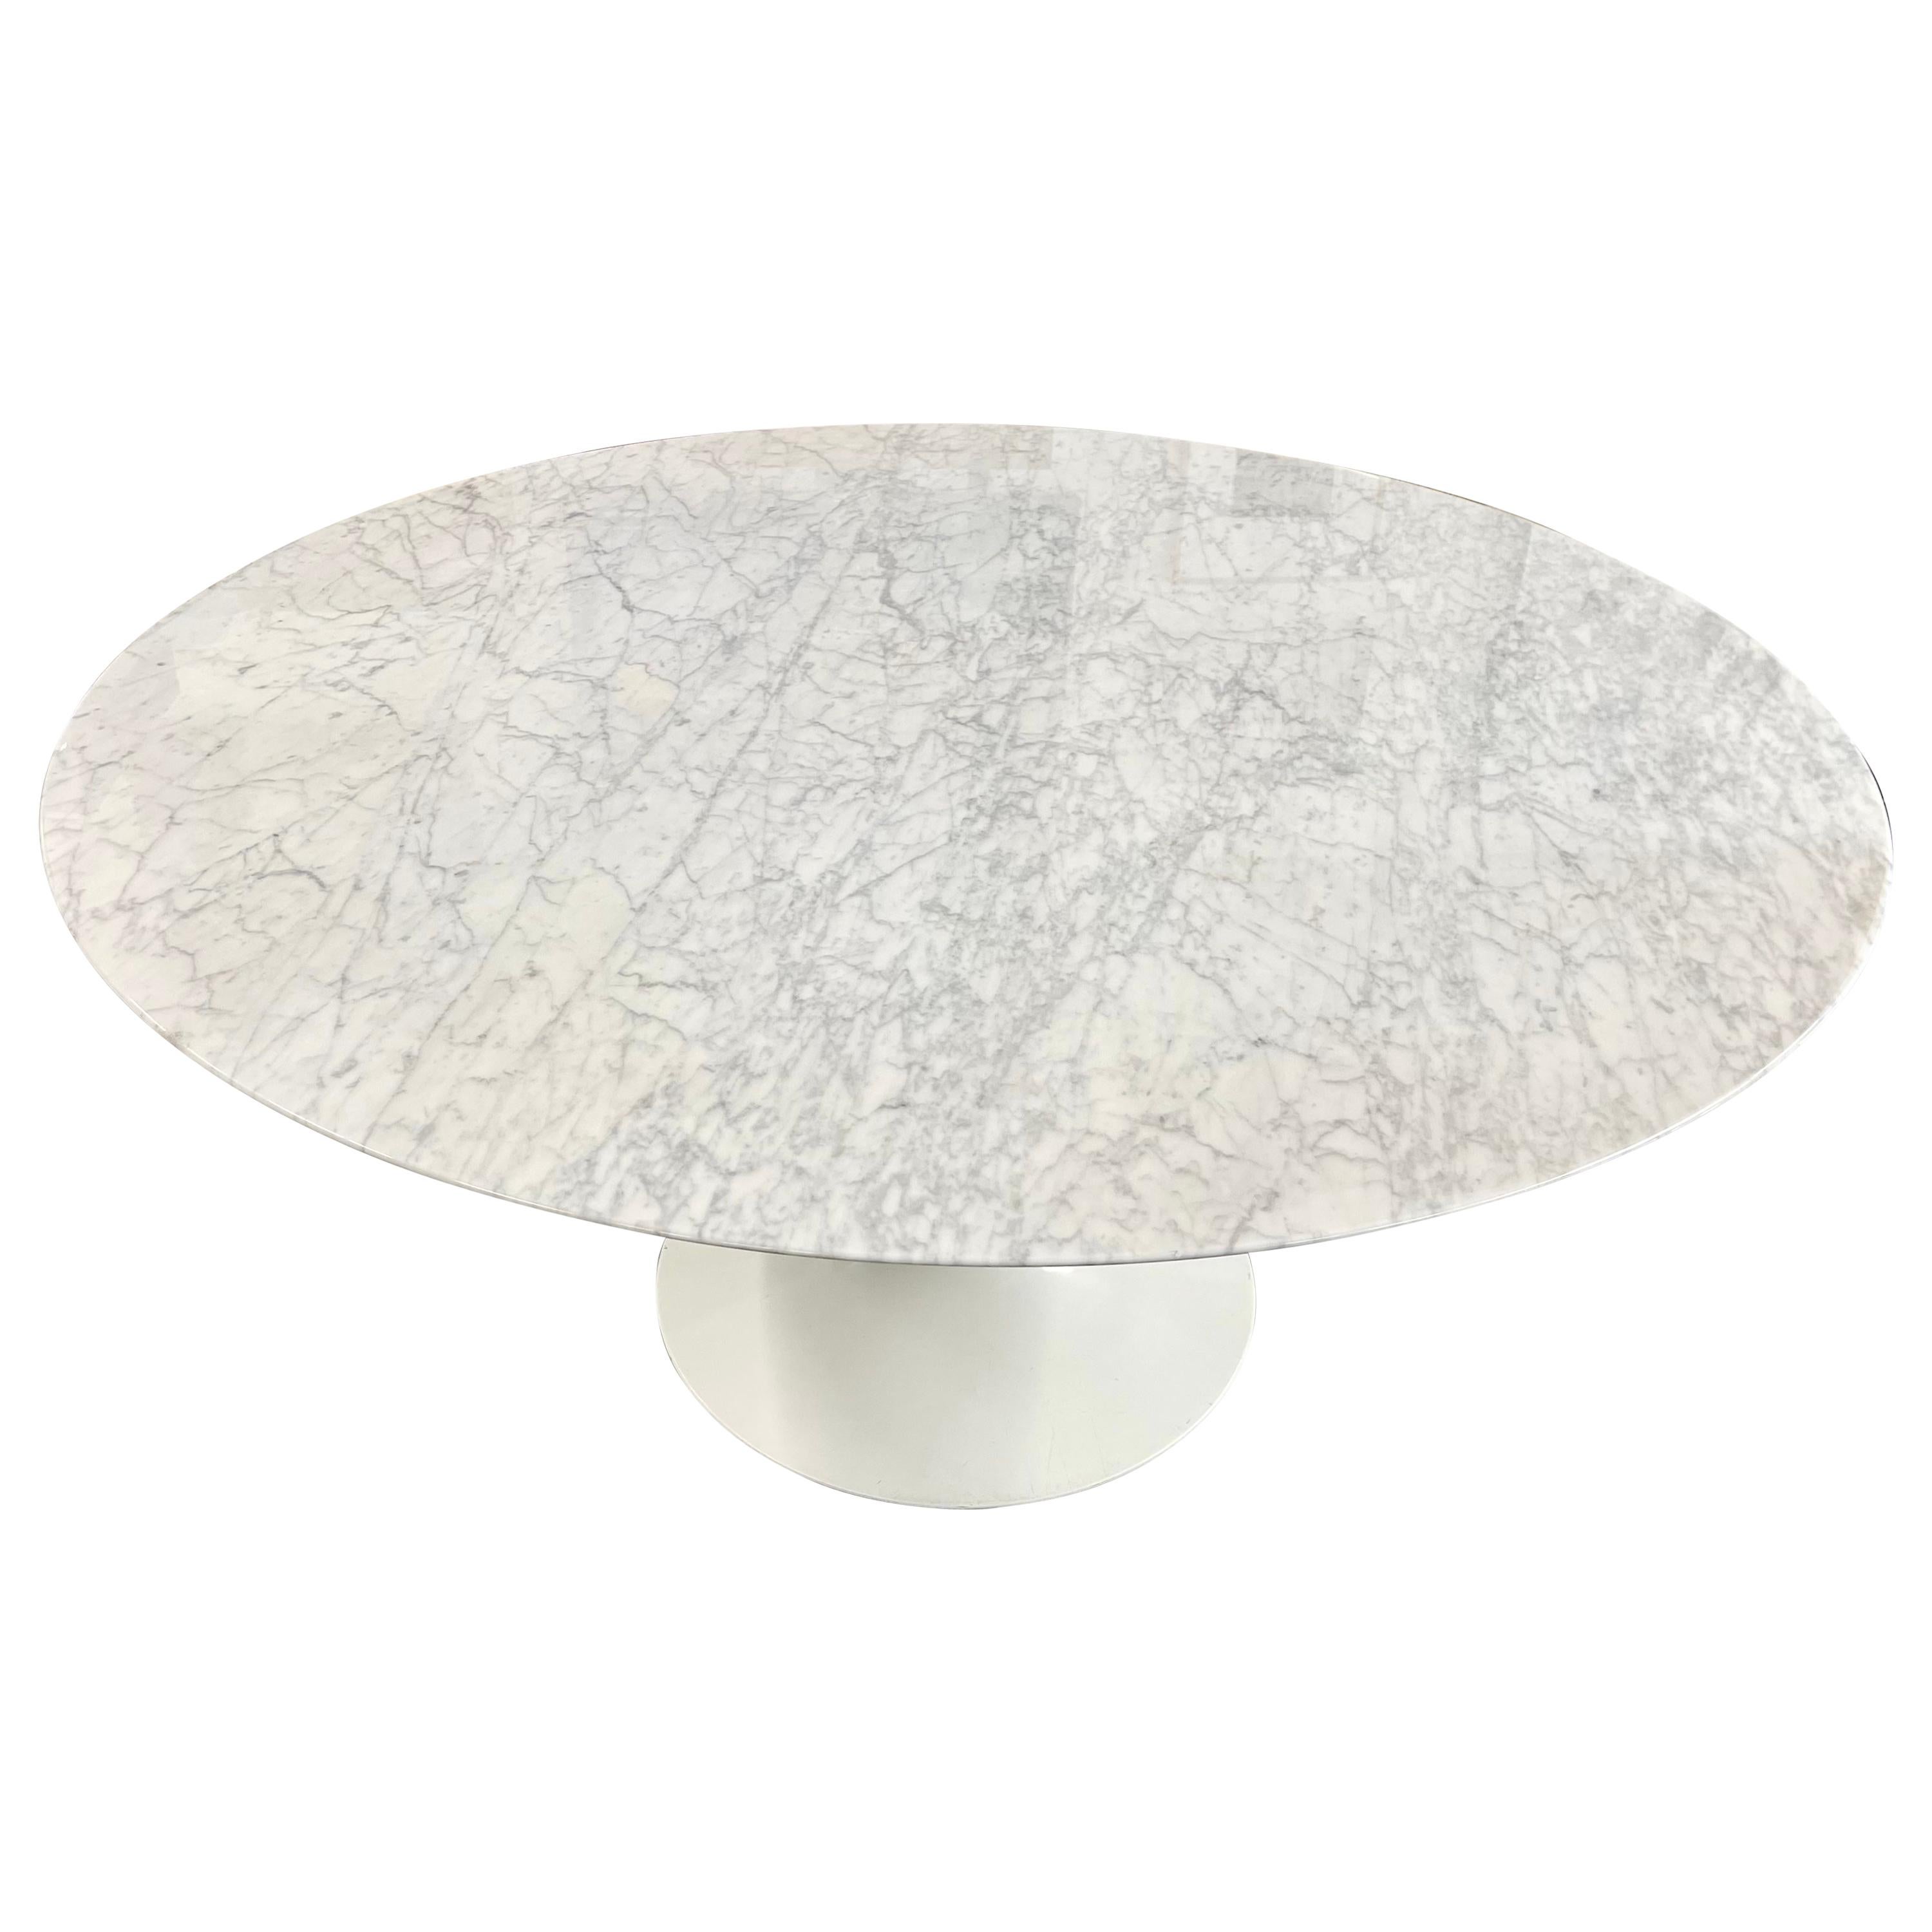 Knoll Saarinen Marble Dining Table